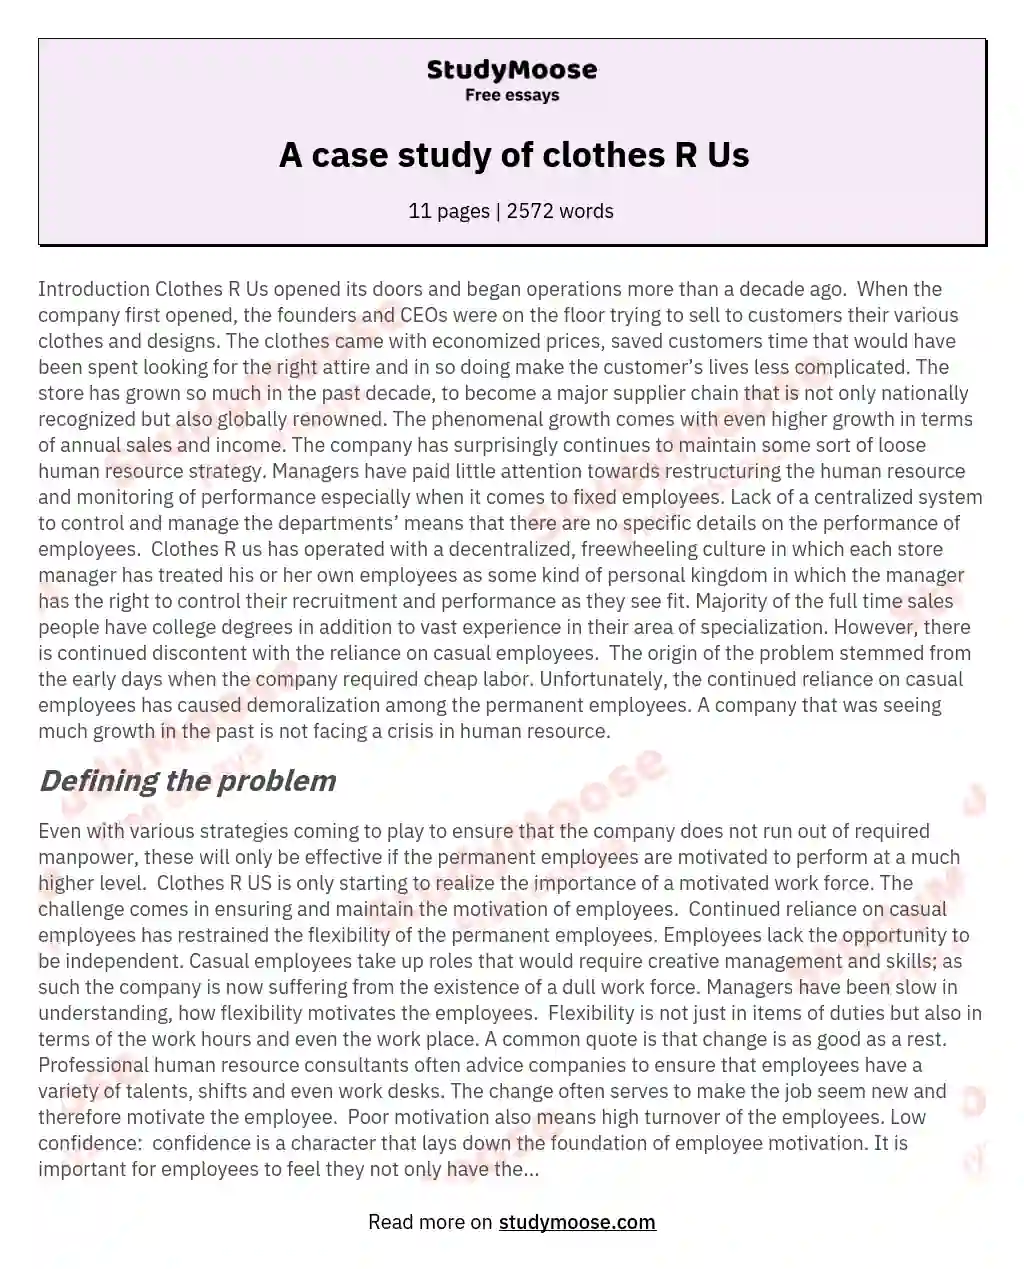 A case study of clothes R Us essay